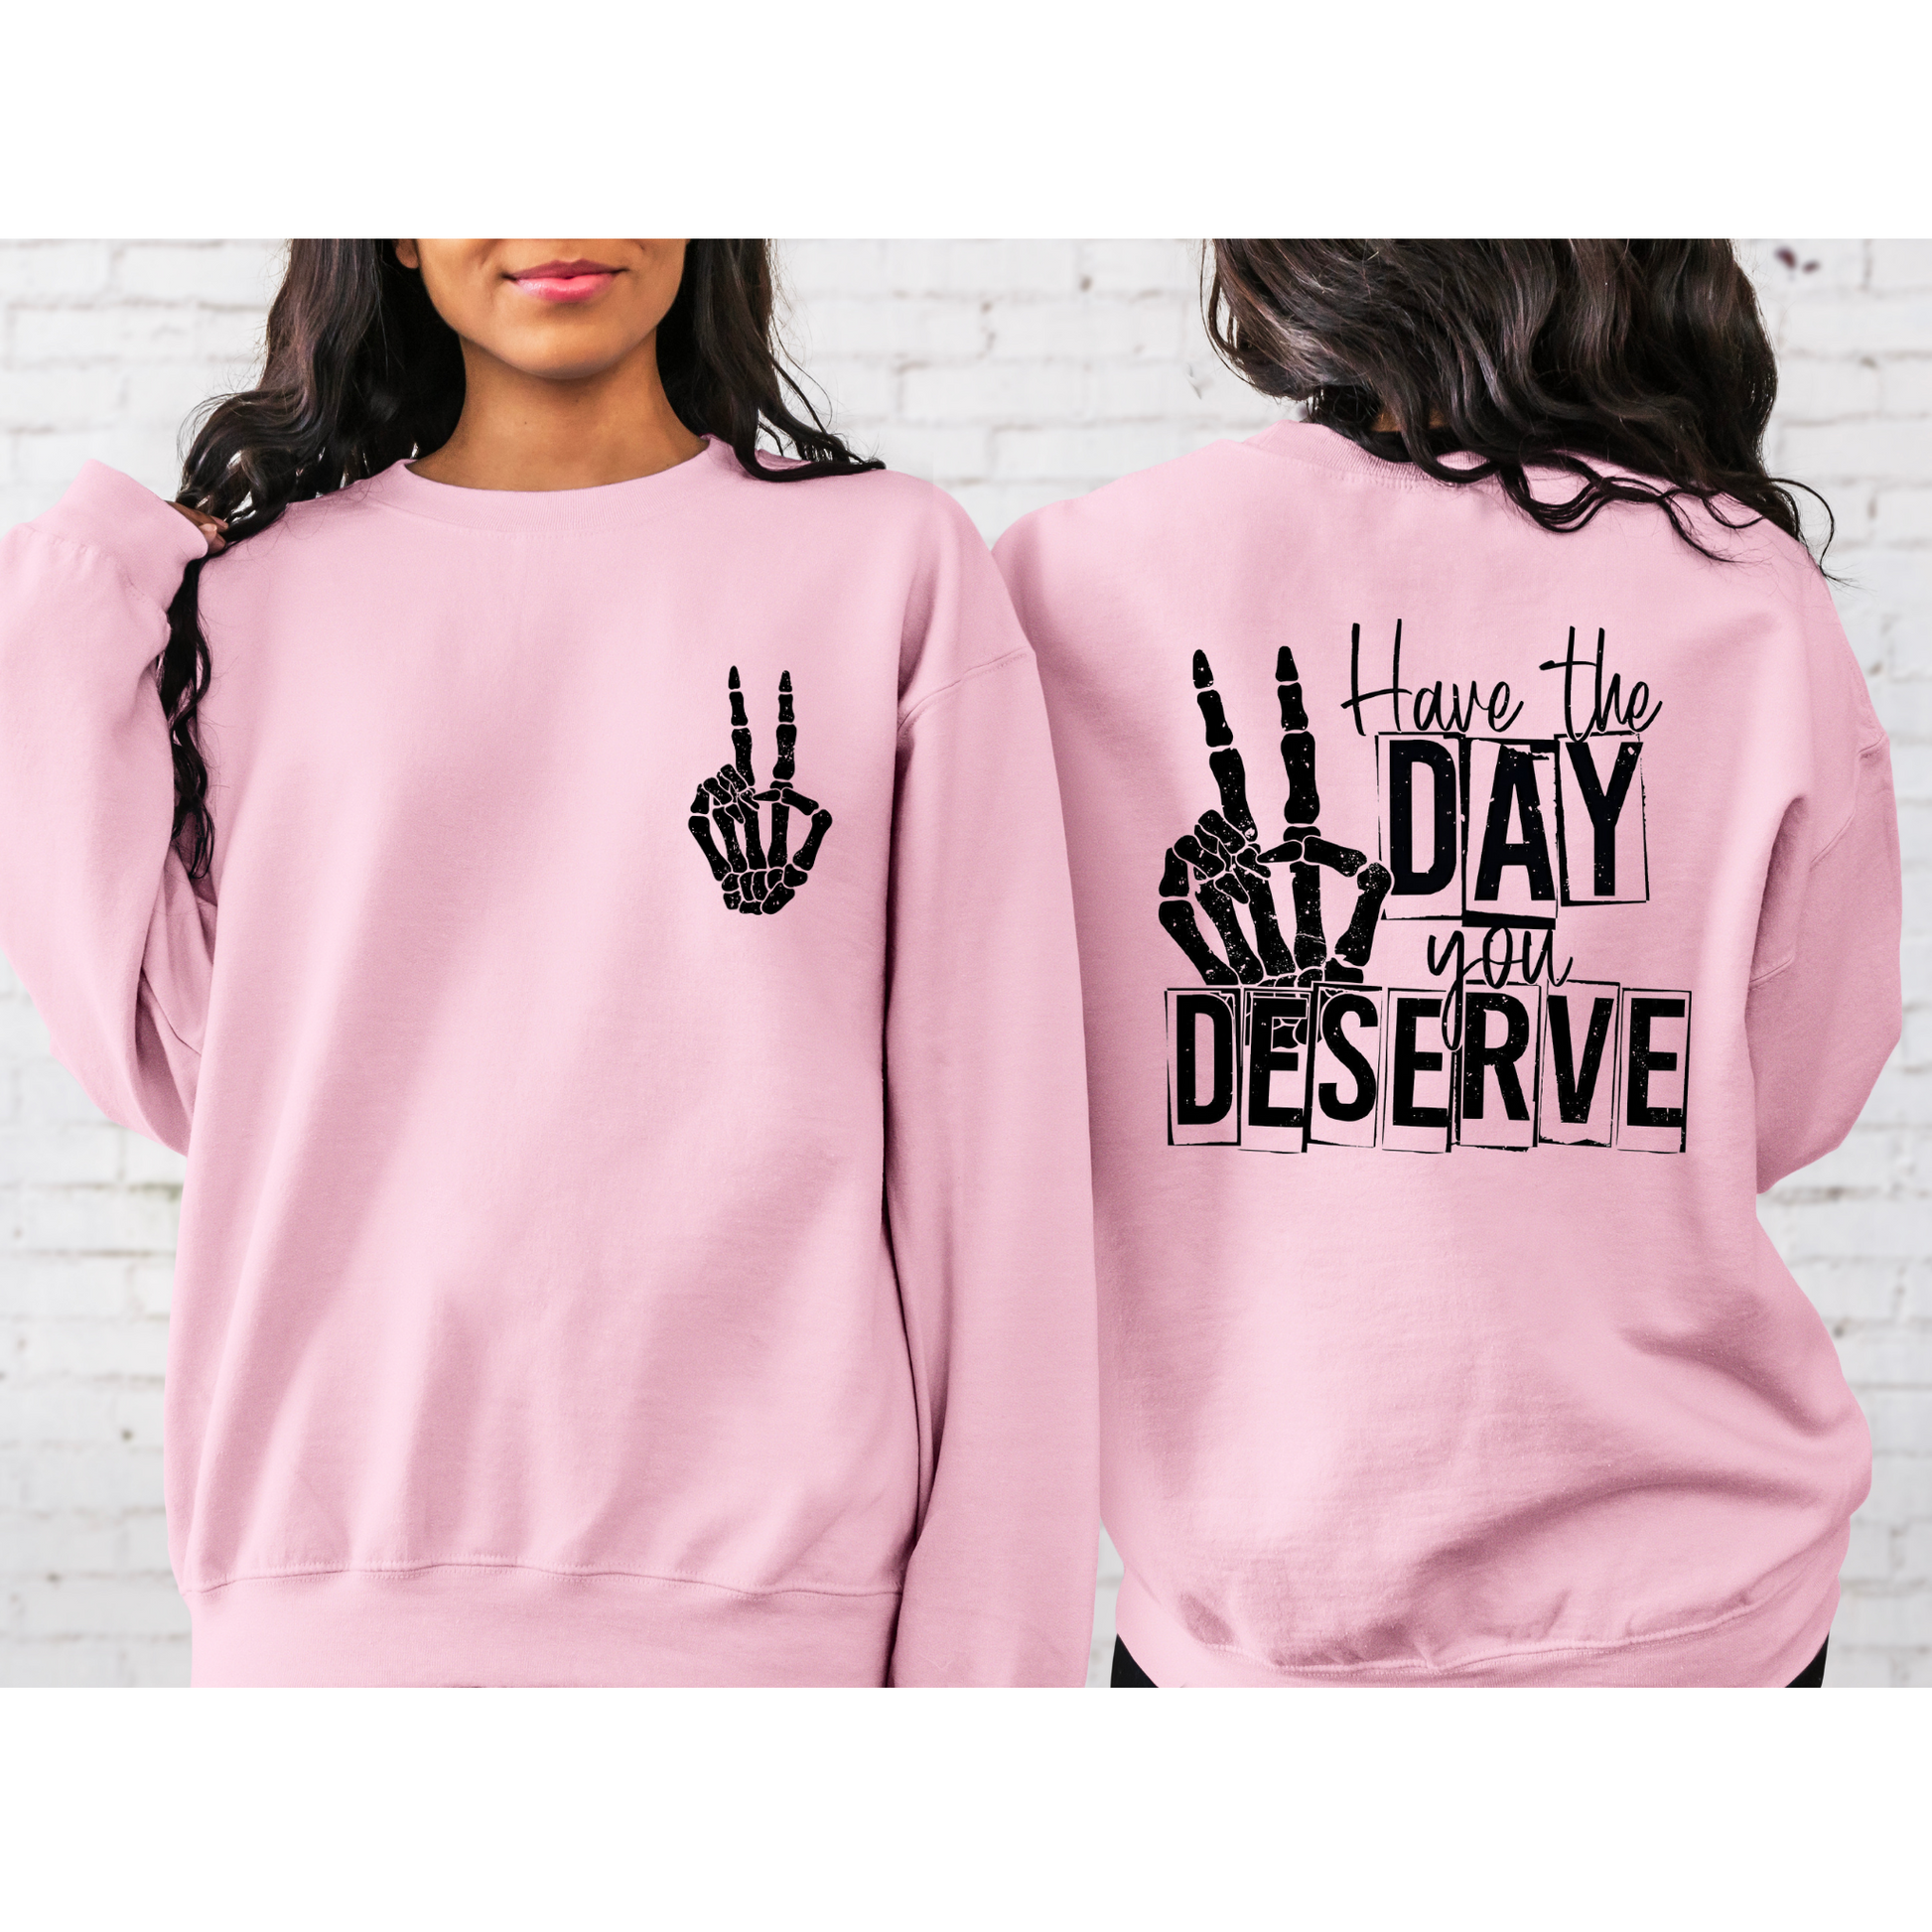 Have The Day You Deserve Crewneck Sweatshirt Light Pink